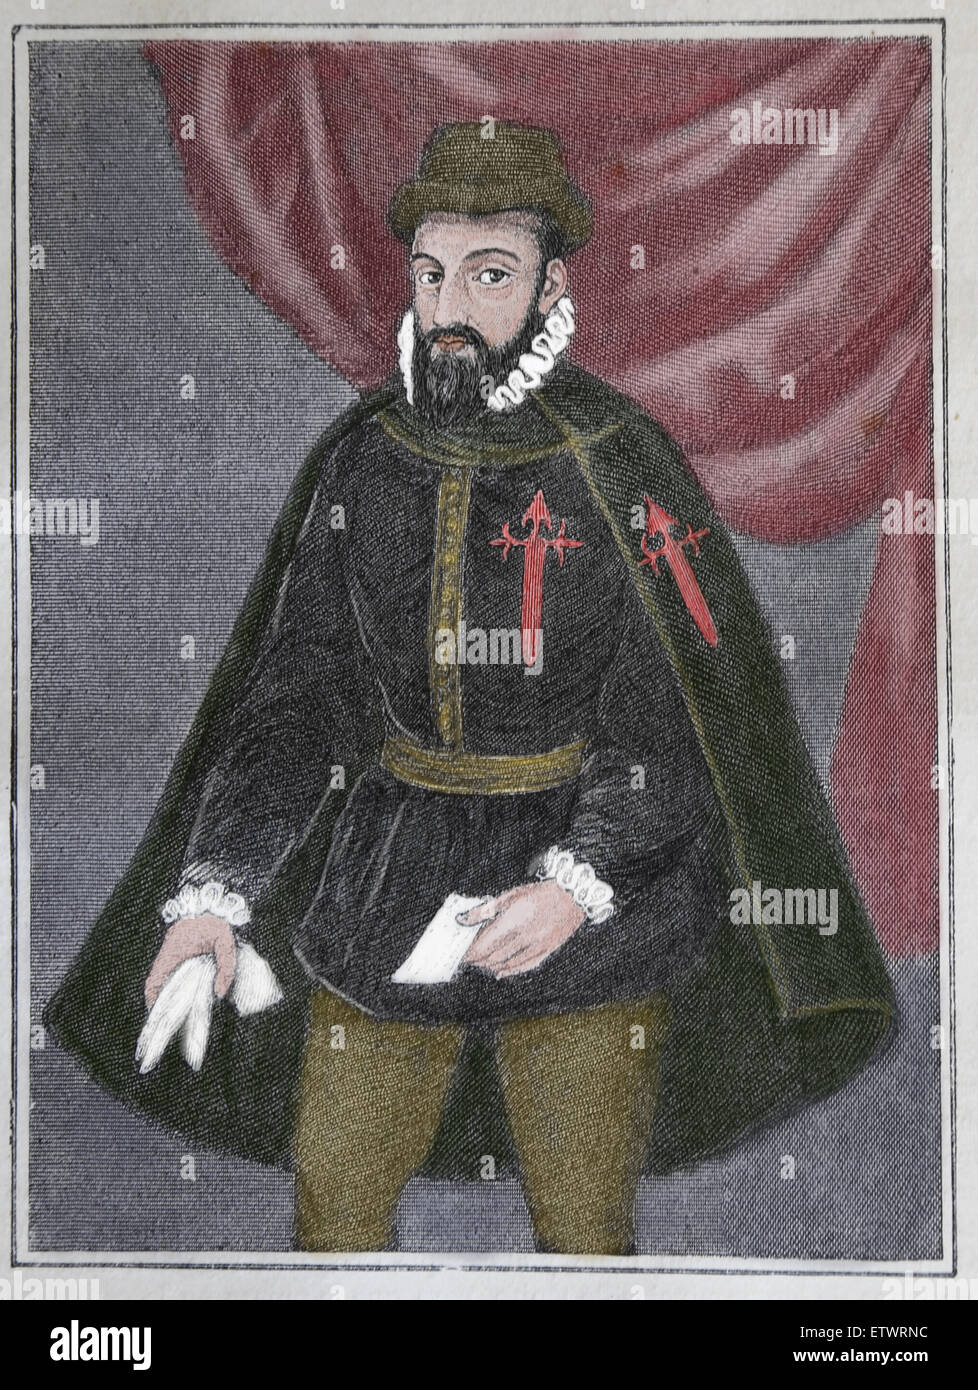 Francisco Pizarro Gonzalez,1471-1541,Conquistador Photo